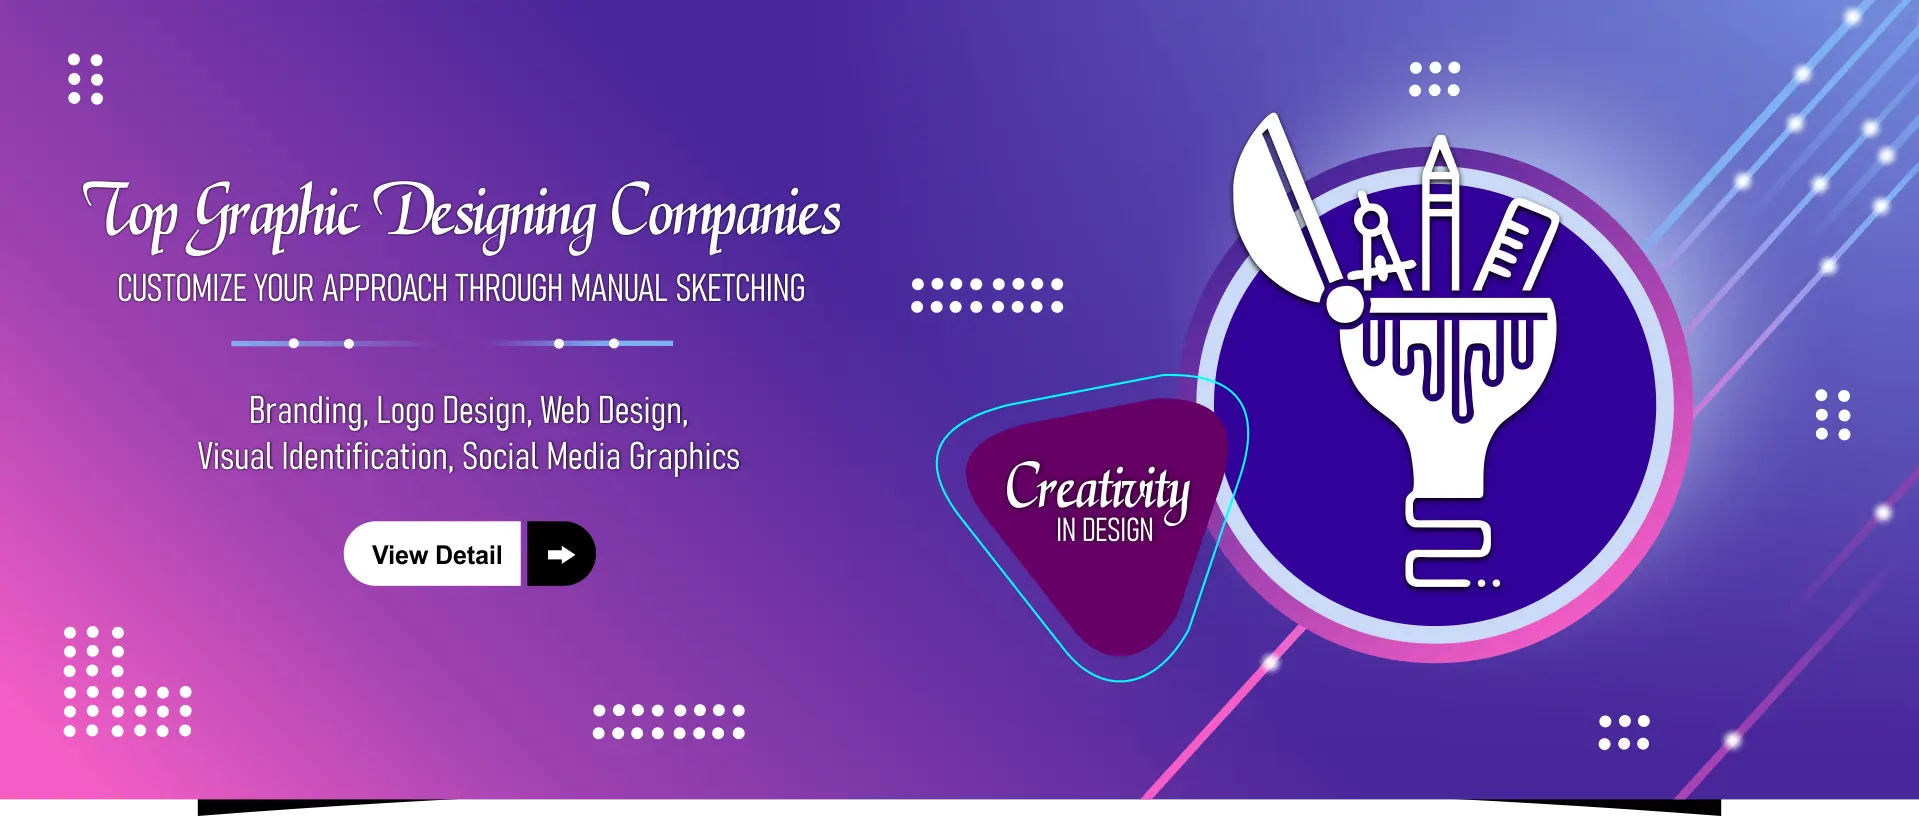 Top Graphic Designing Company Parsh Digital